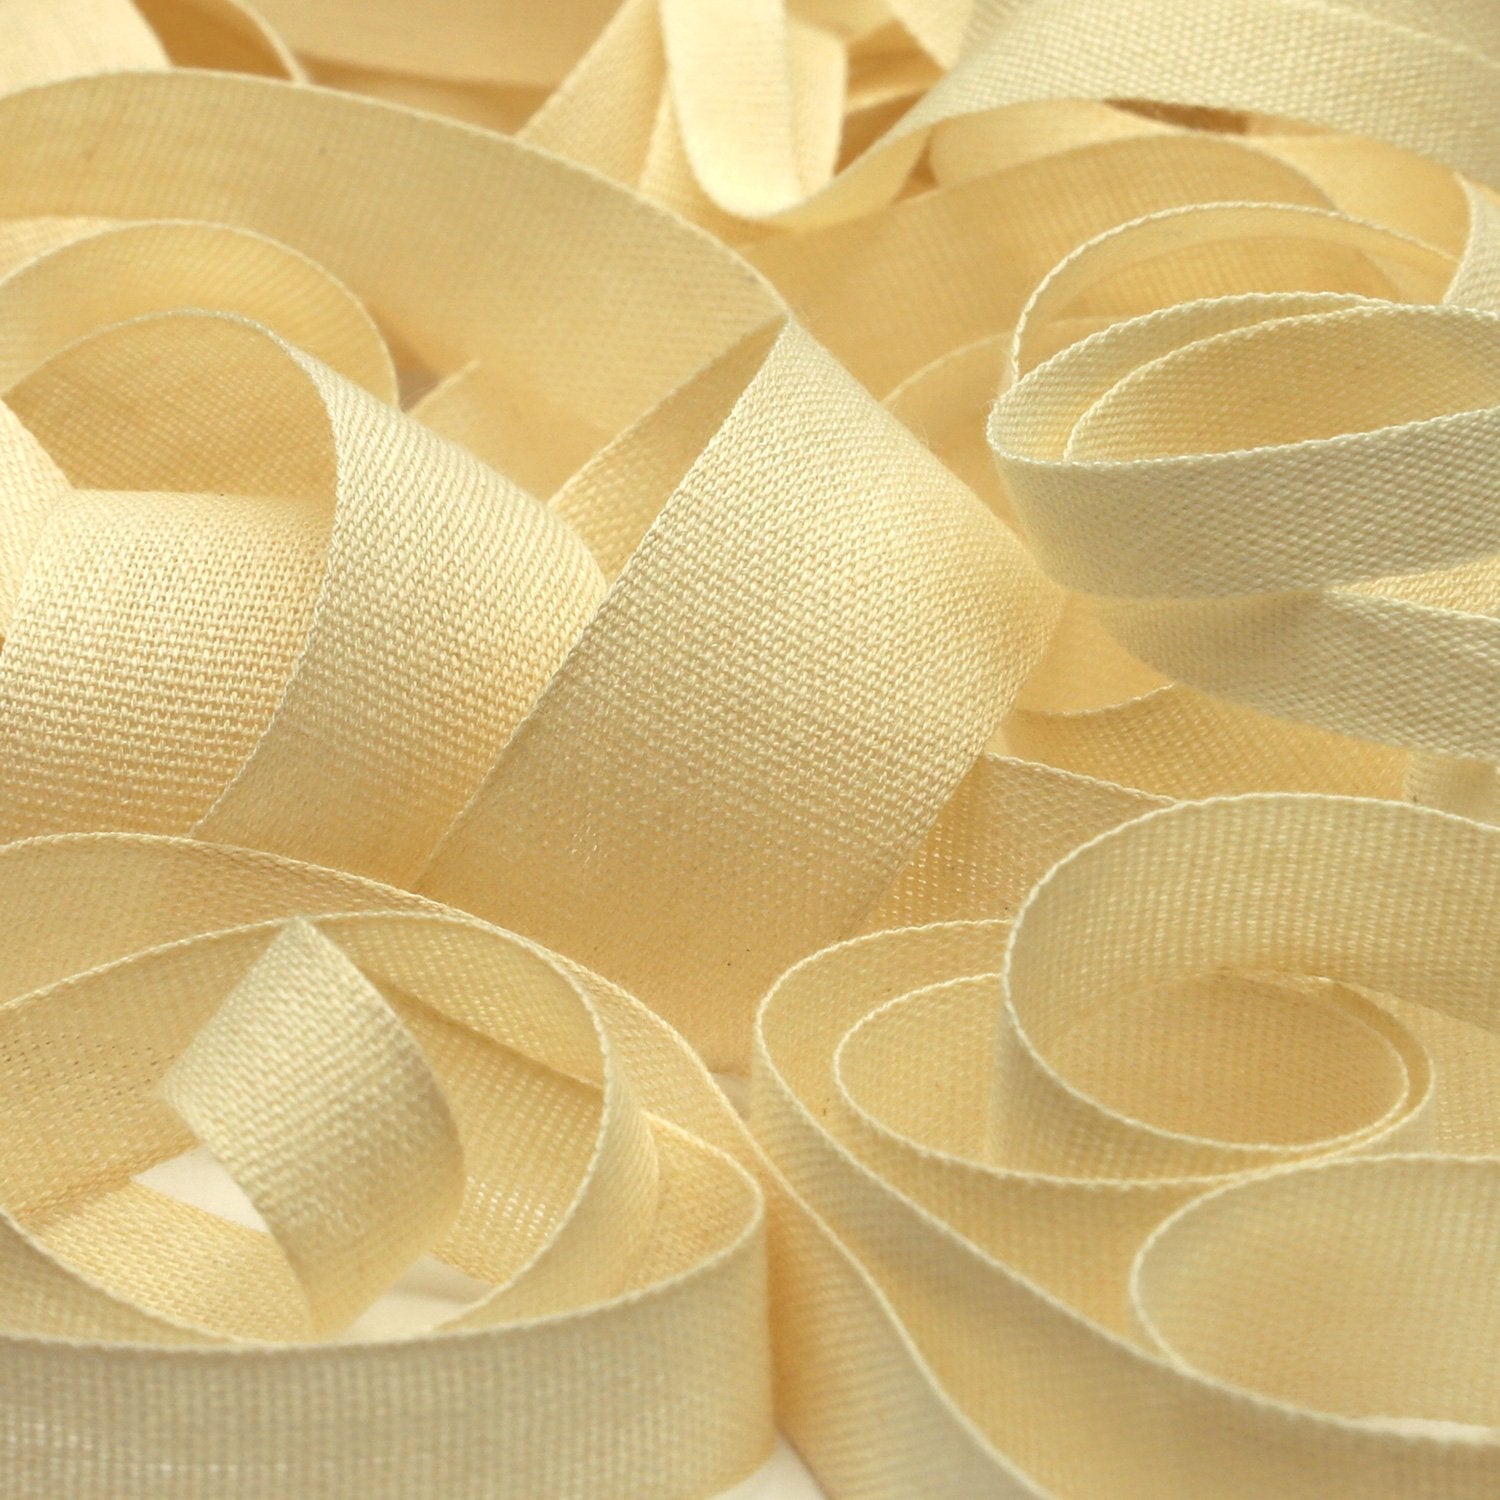 FUJIYAMA RIBBON Organic Cotton Taffeta Ribbon 4mm Ecru 9.14 Meters Roll